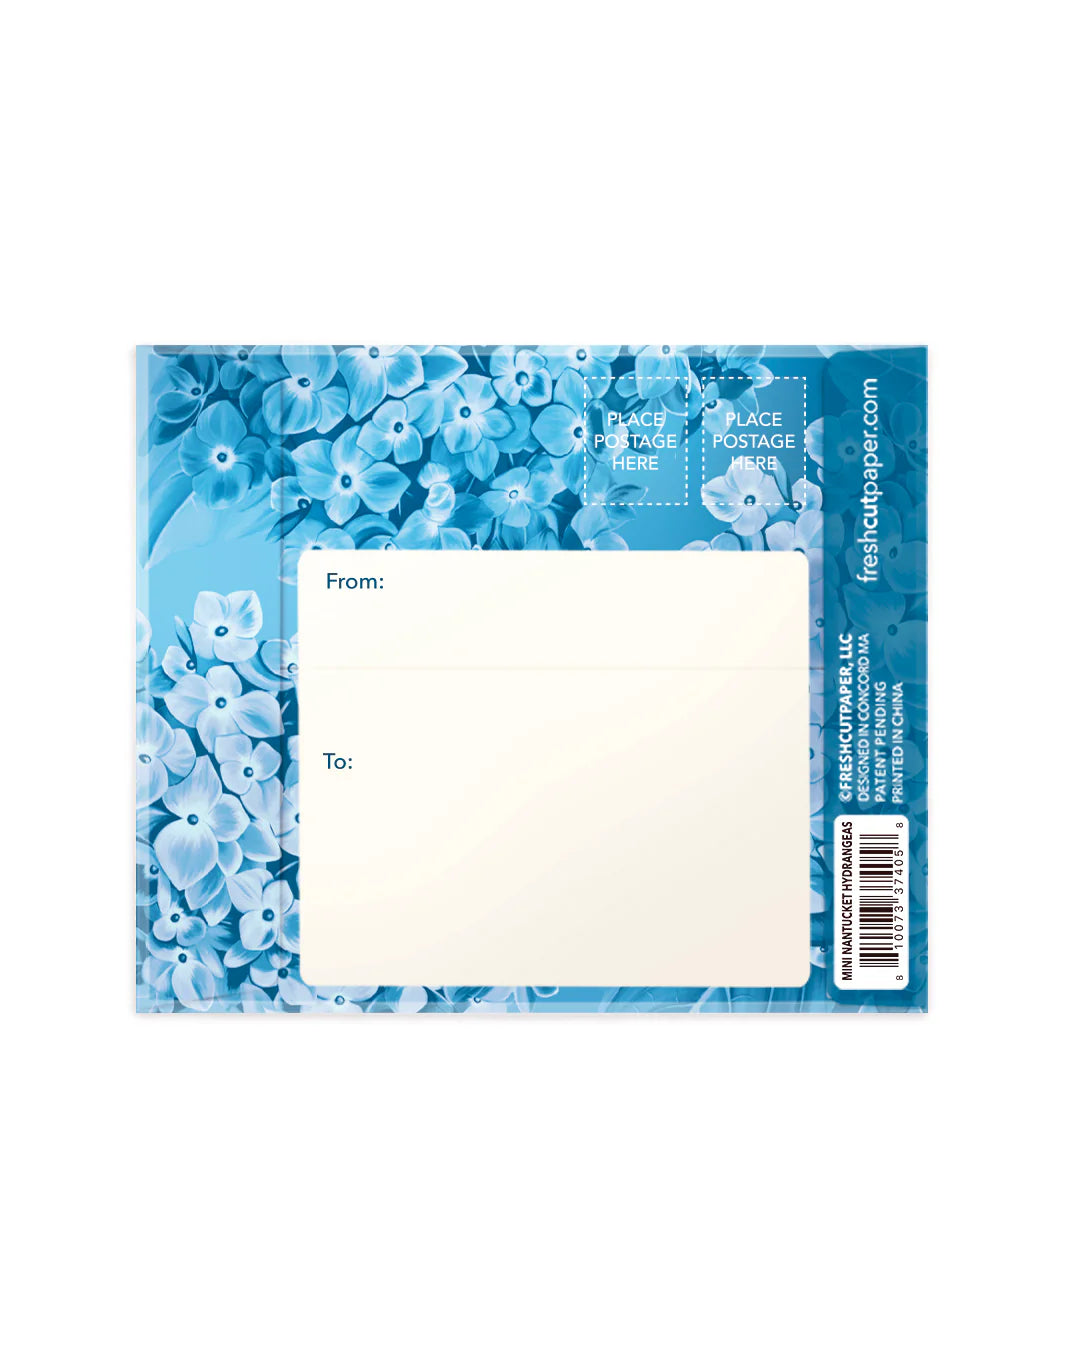 back view of blue mailing envelope.